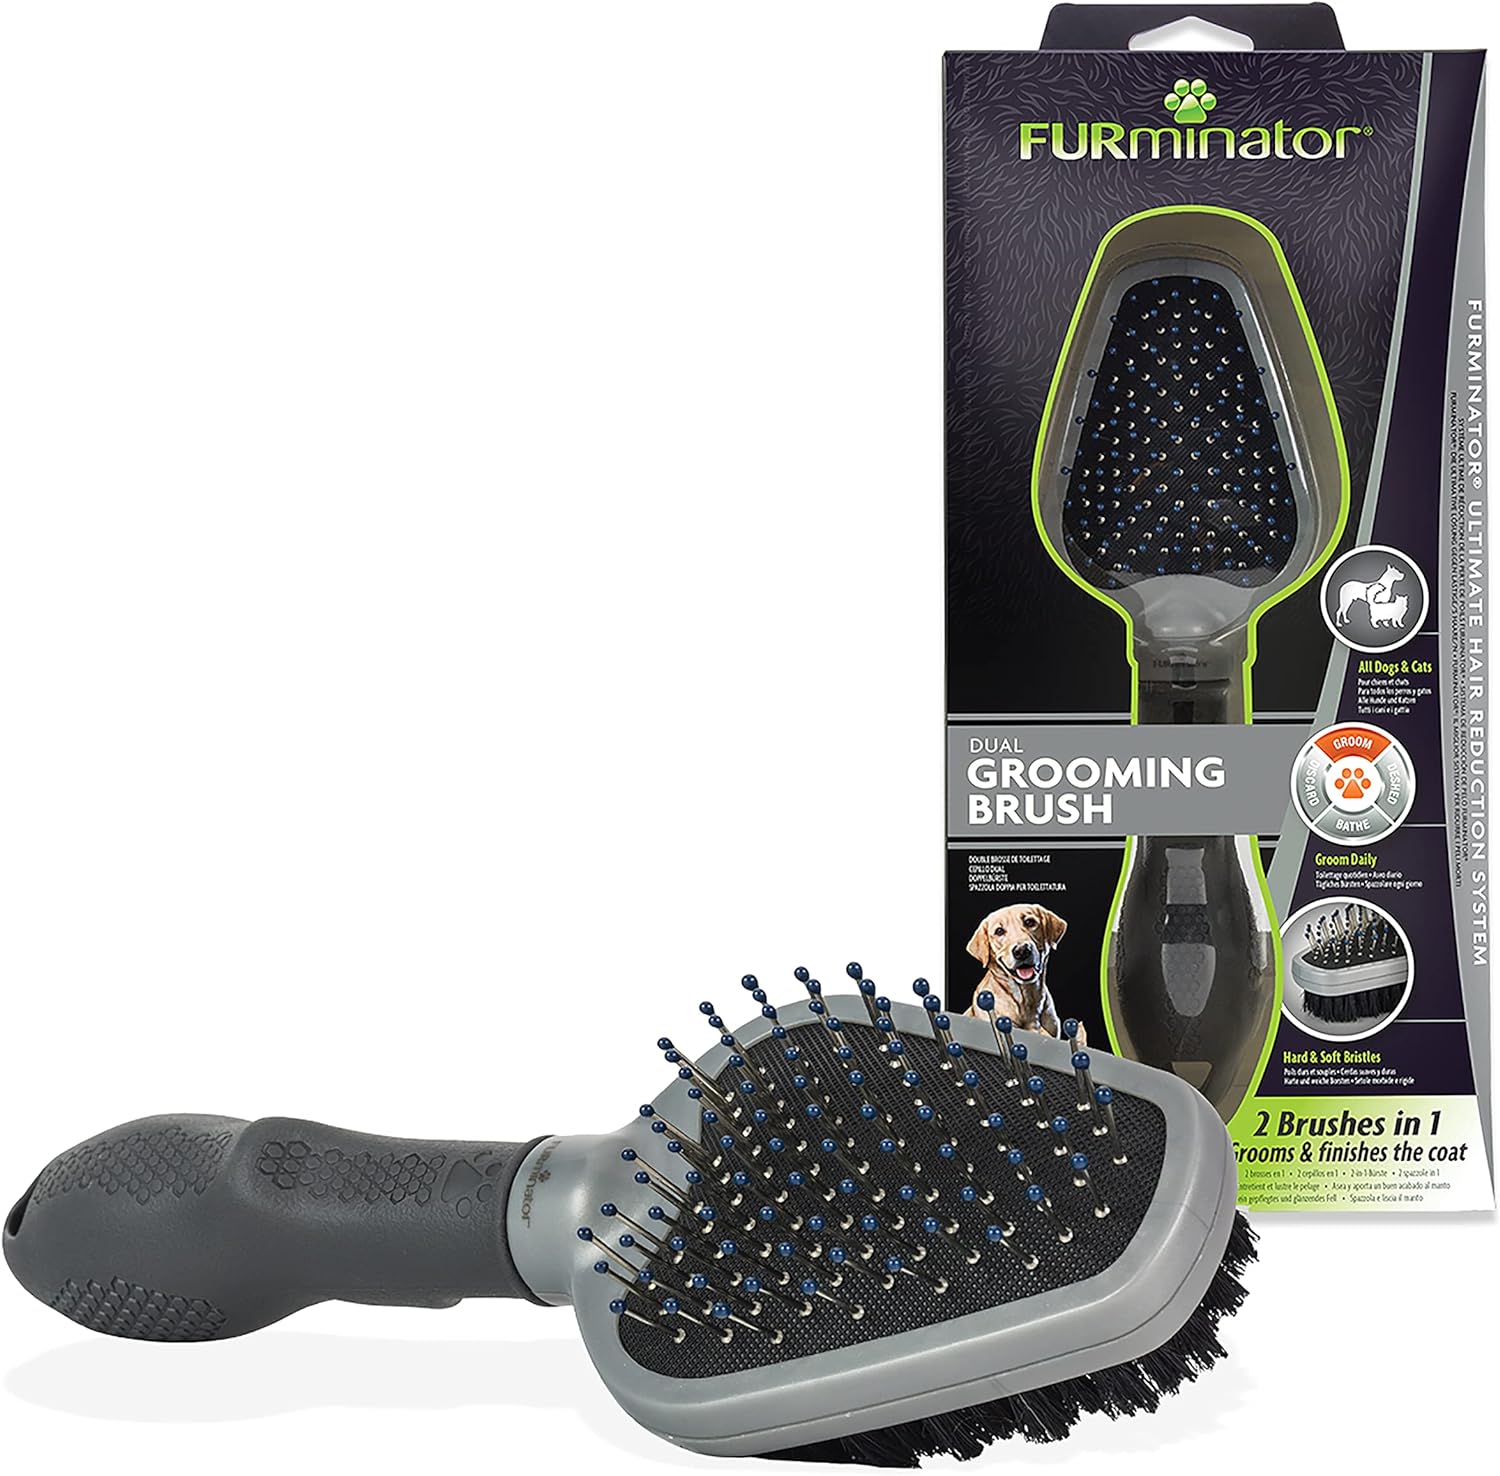 FURminator Dual Grooming Brush